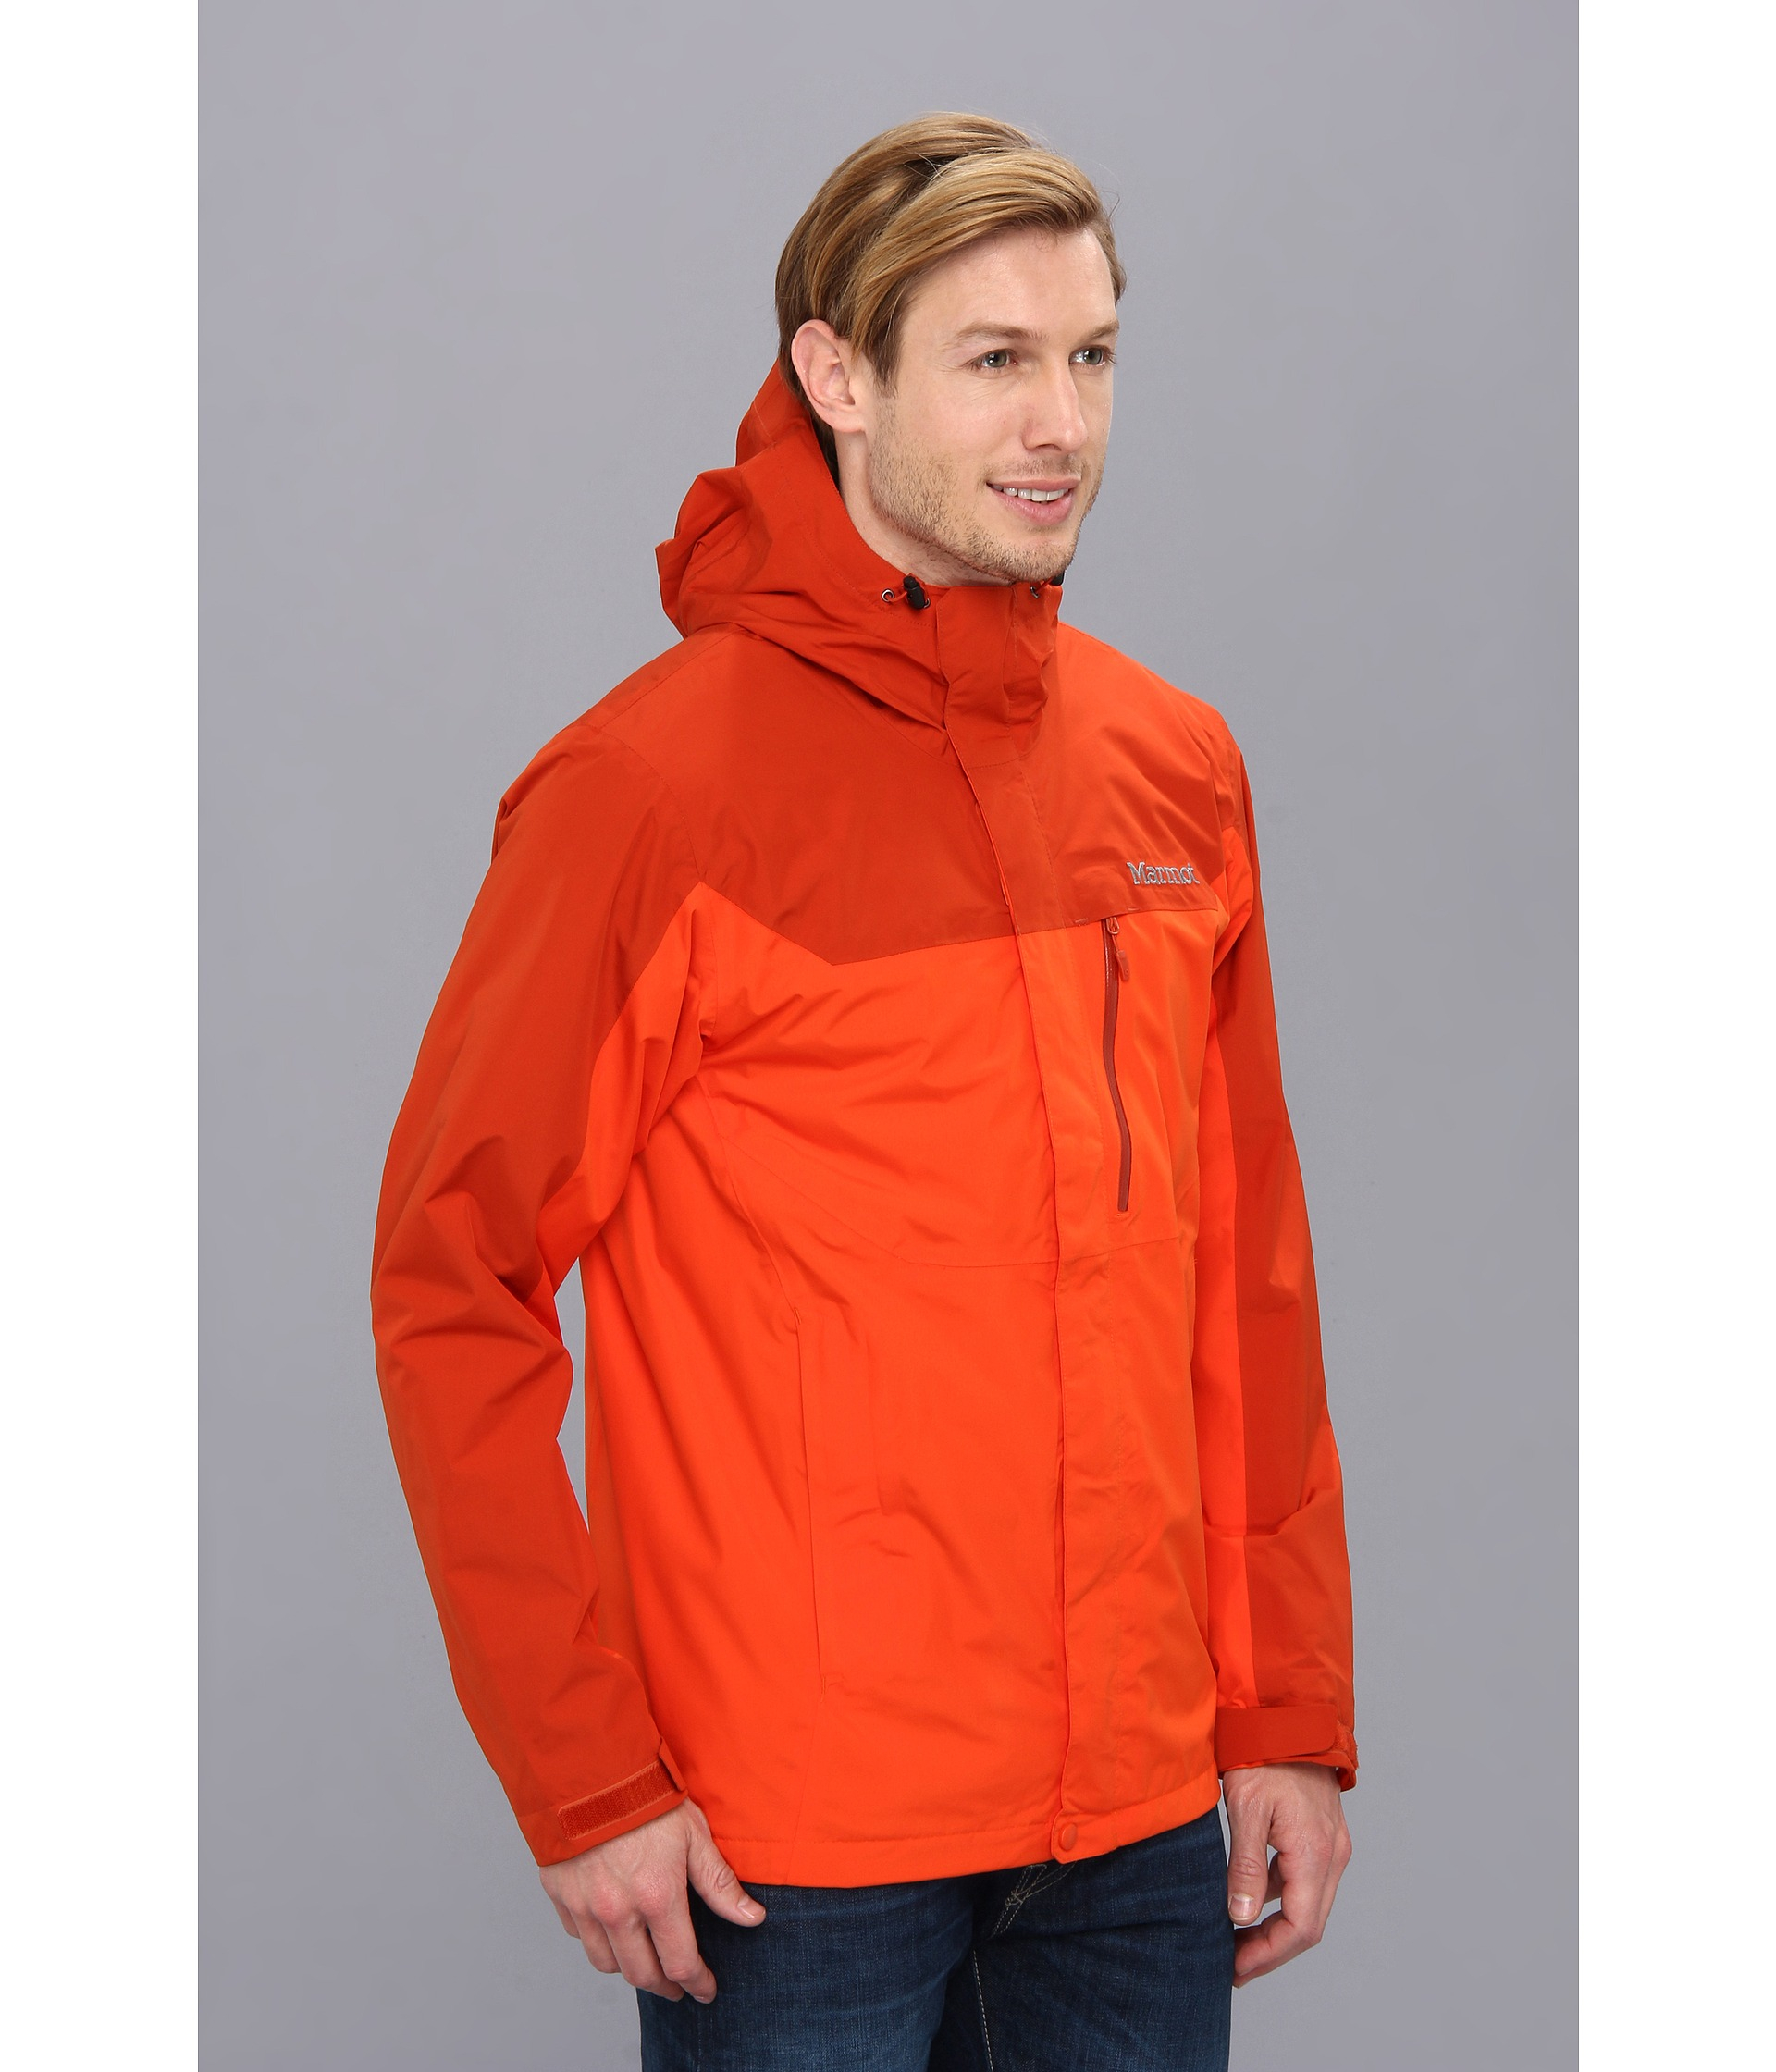 Marmot Southridge Jacket in Orange for Men - Lyst